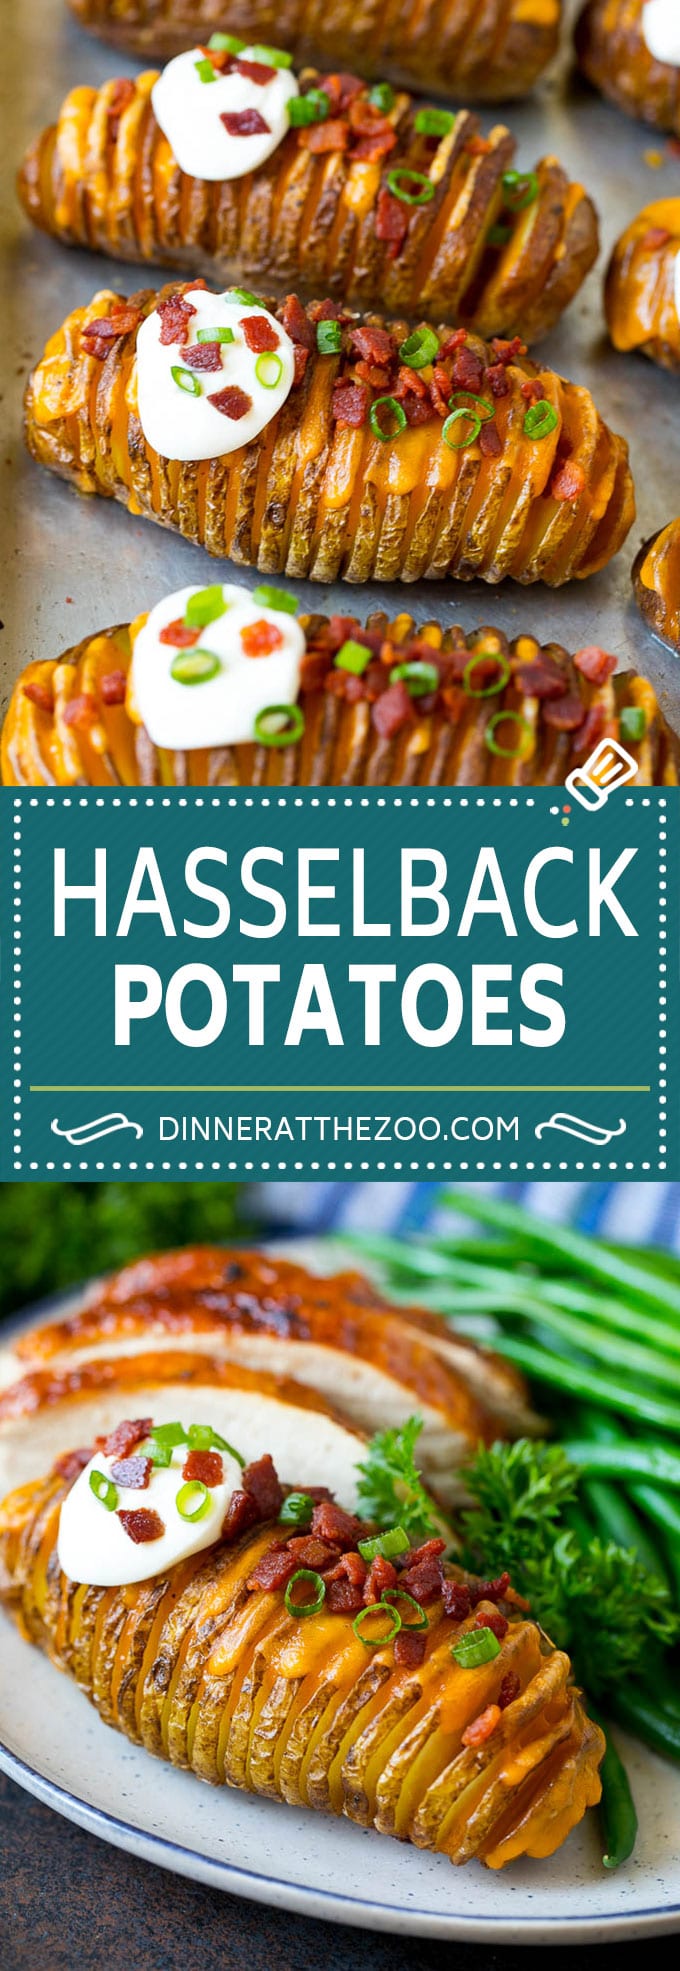 Hasselback Potatoes Recipe #potatoes #bacon #sidedish #cheese #dinner #dinneratthezoo